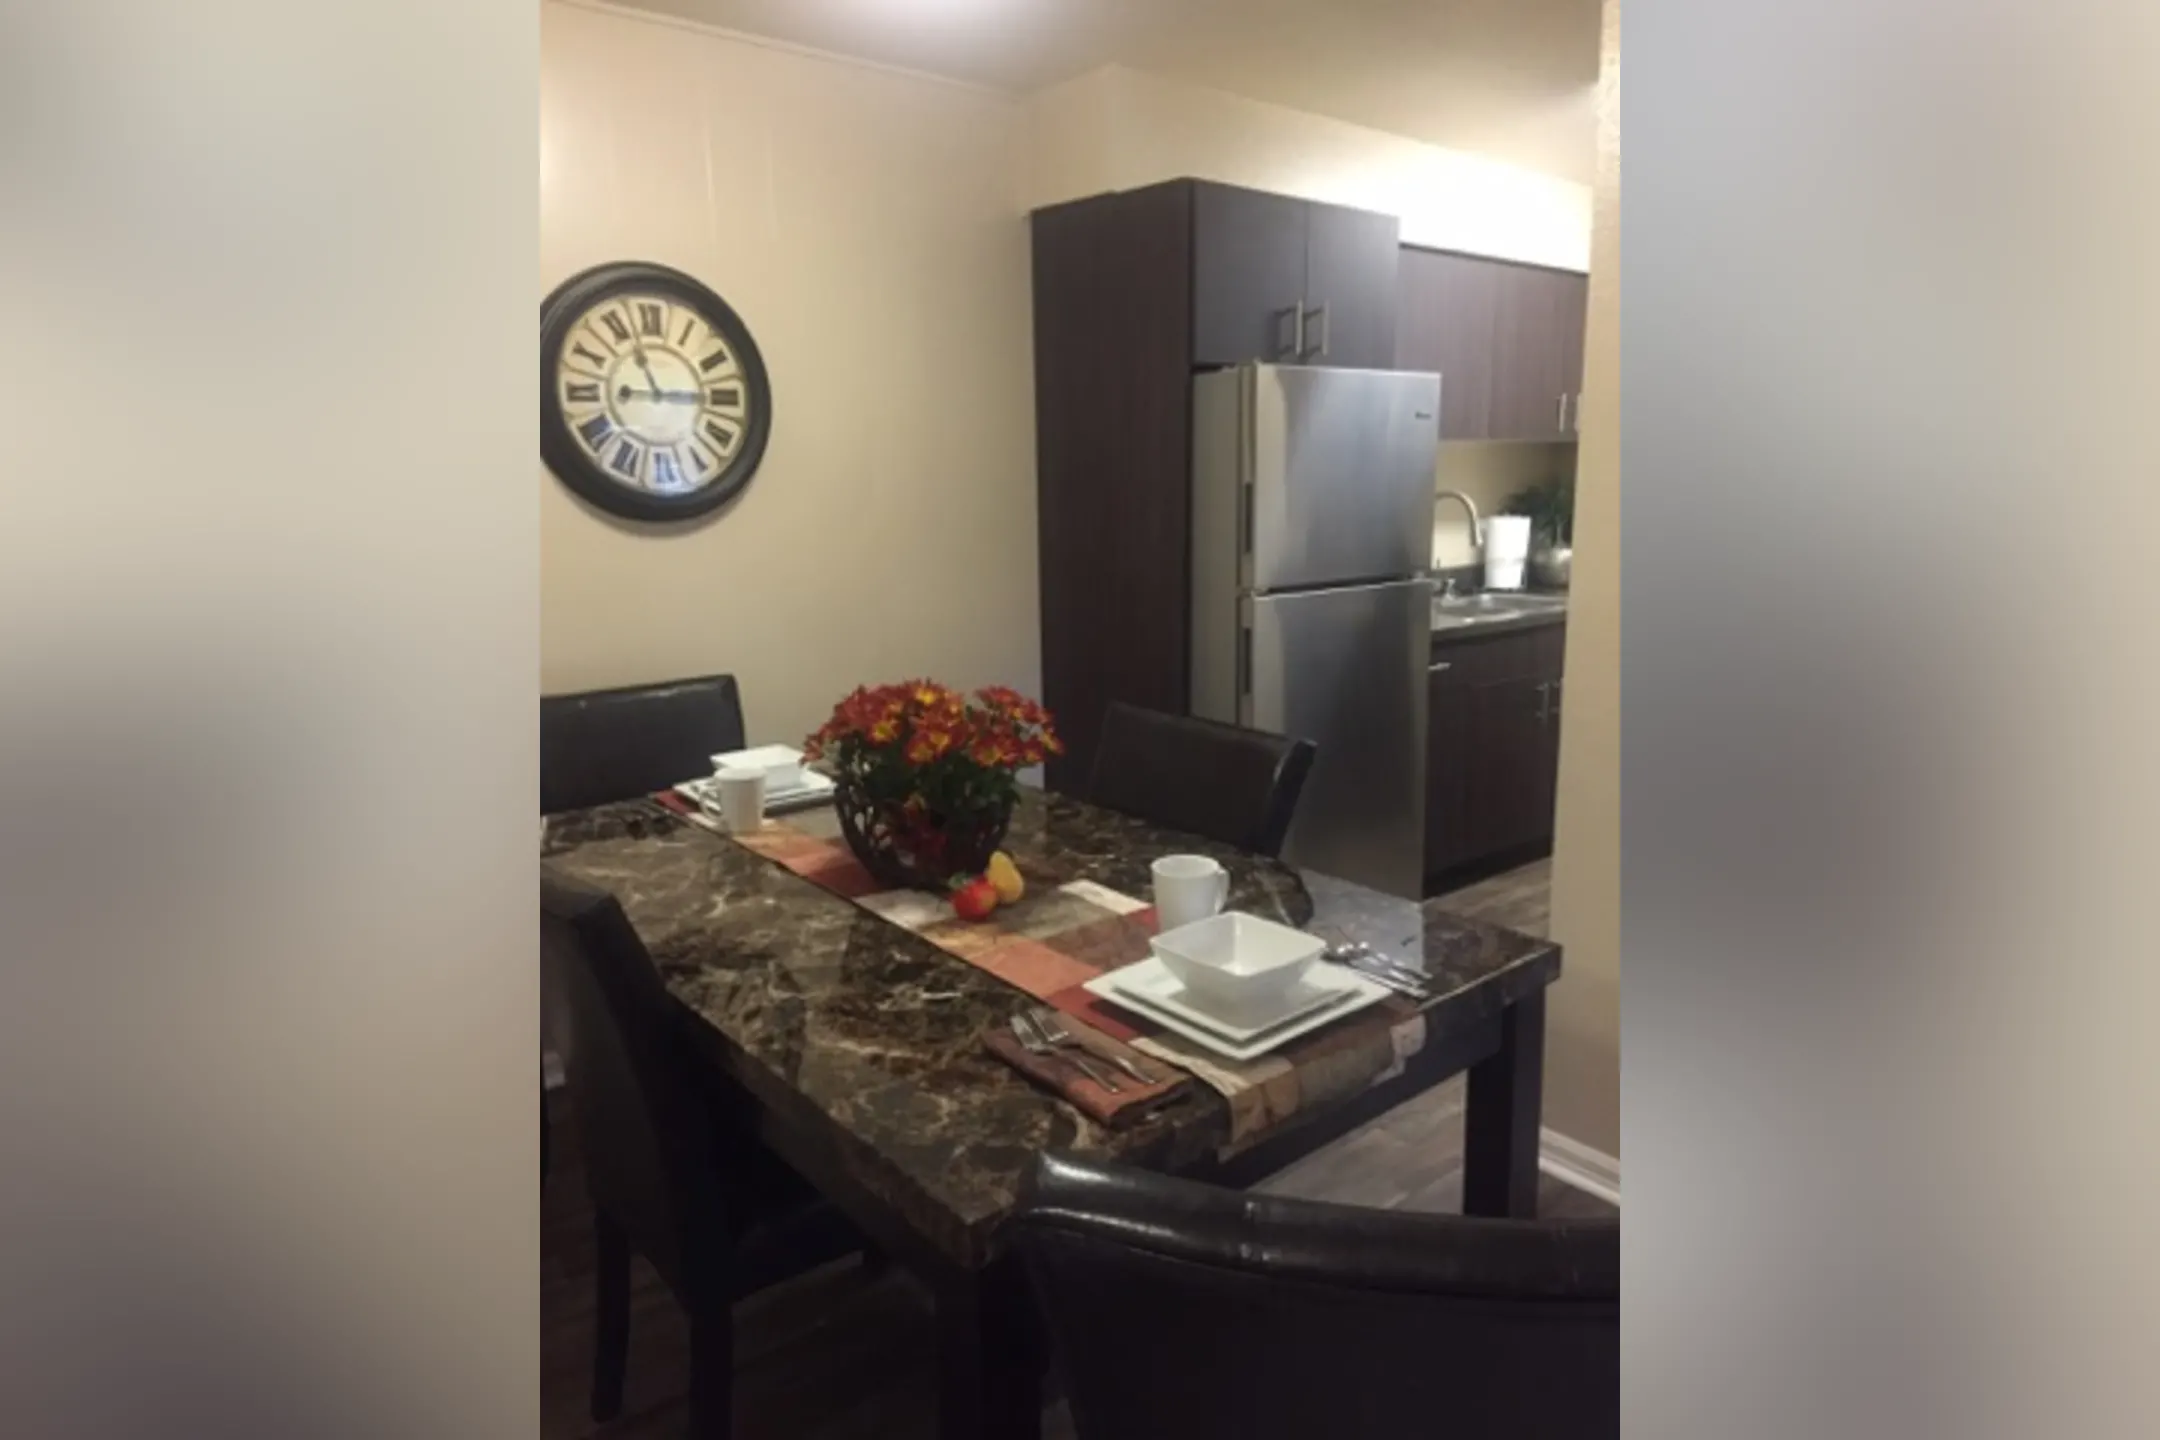 Dining Room - Aspenleaf Apartments - Fort Collins, CO